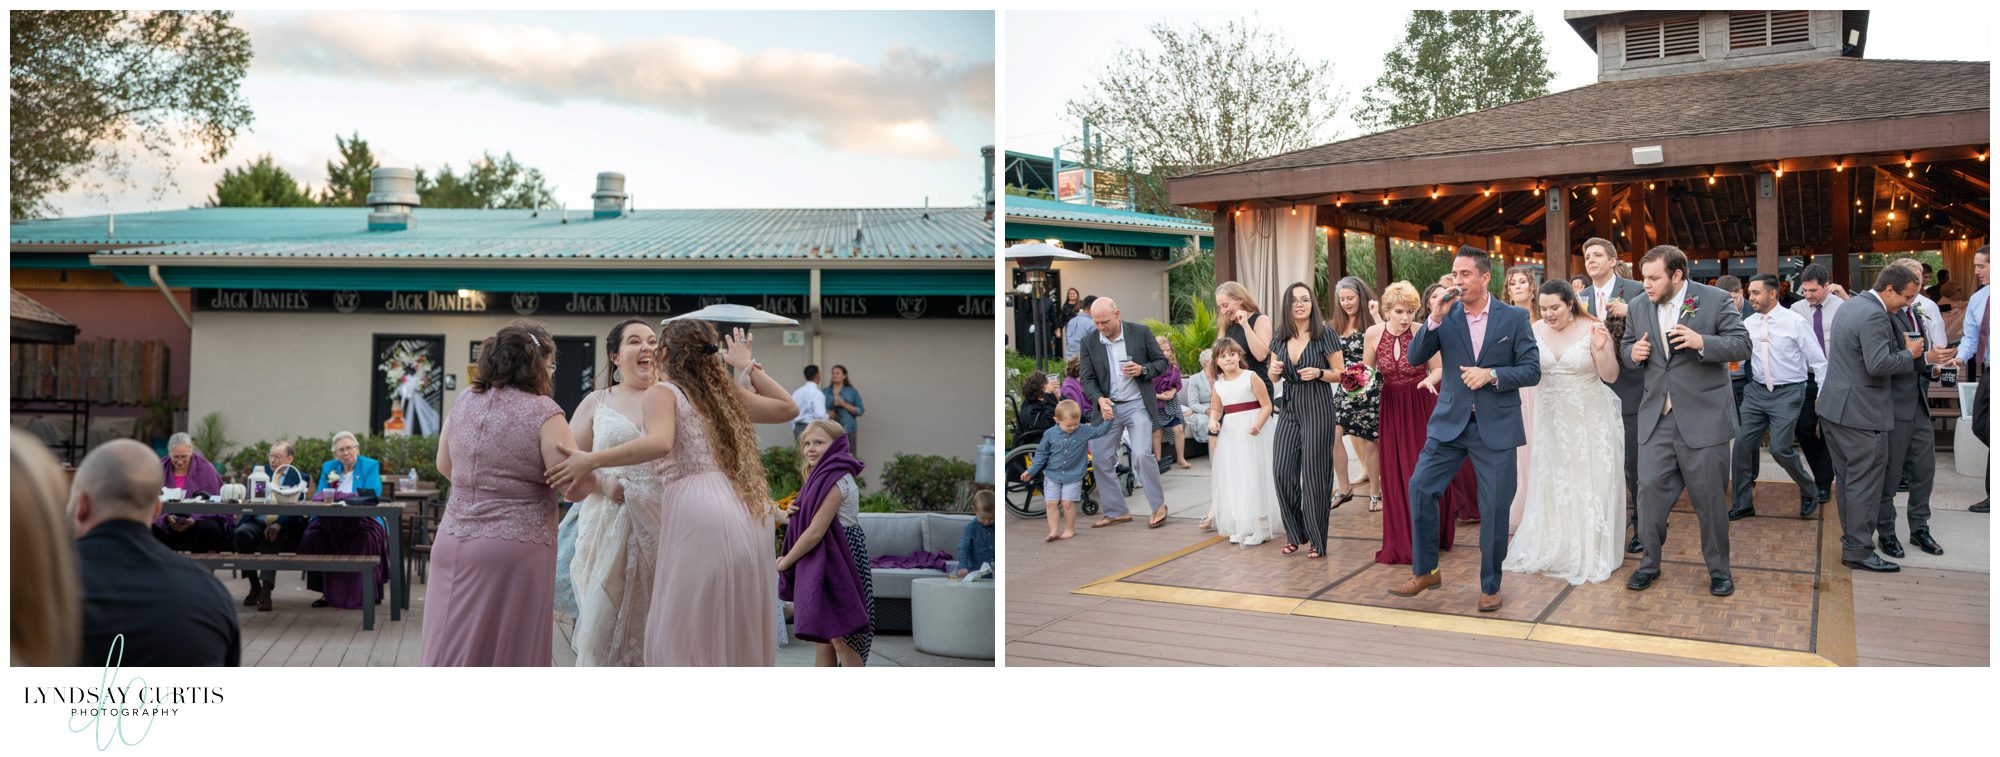 Virginia Beach wedding photographer Lyndsay Curtis Photography - Bride and Groom Garter toss during wedding reception